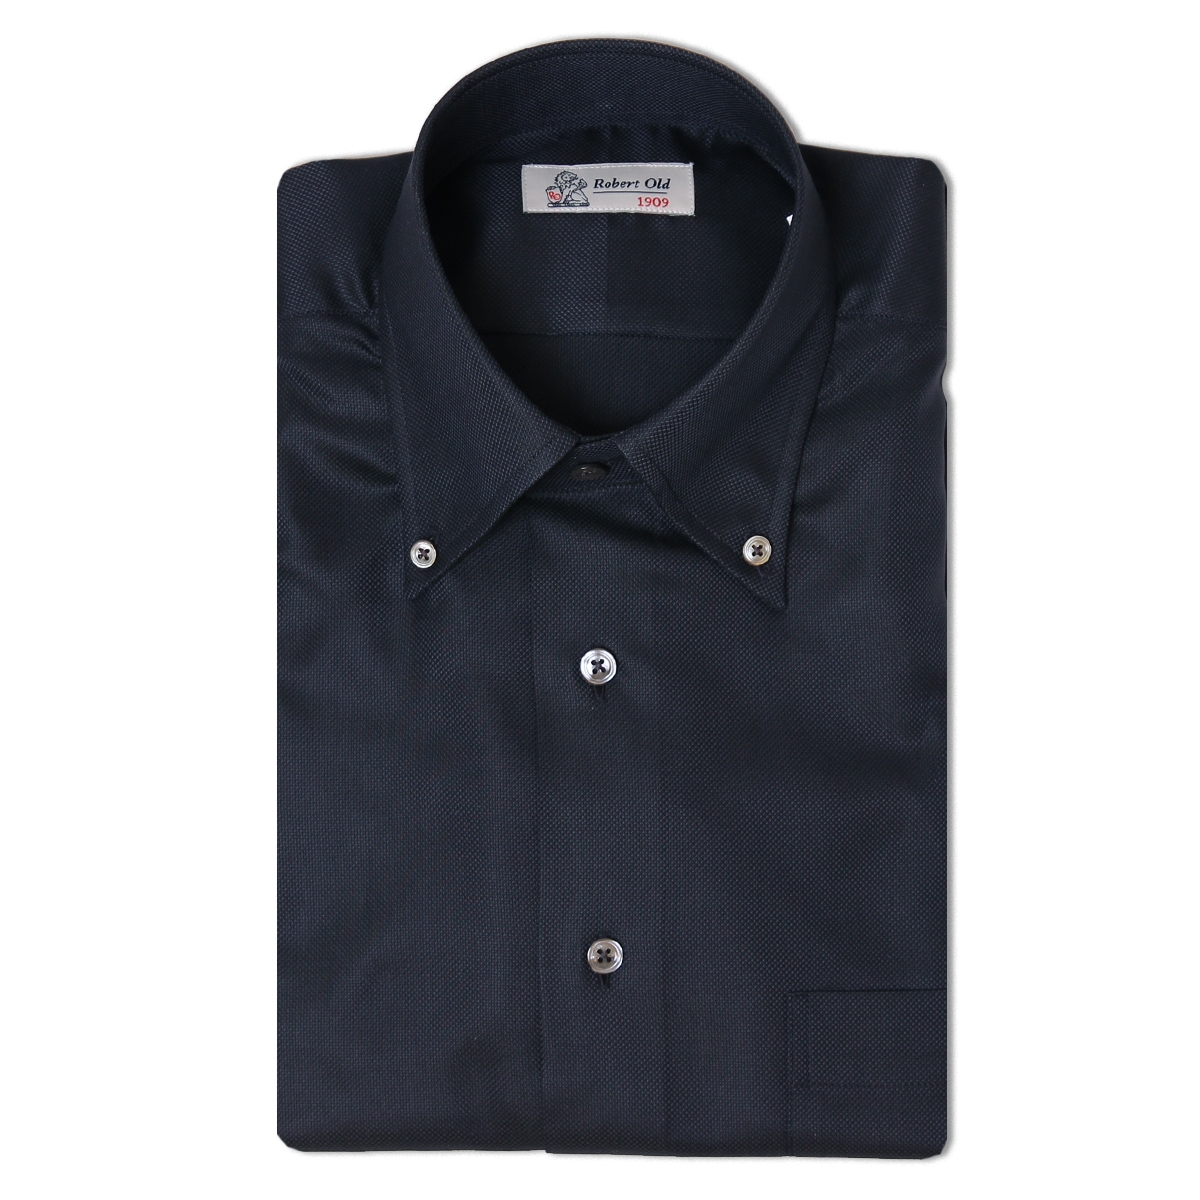 Robert Old Mens Black Weave-Effect Cotton Oxford Shirt – 40 – Robert Old & Co